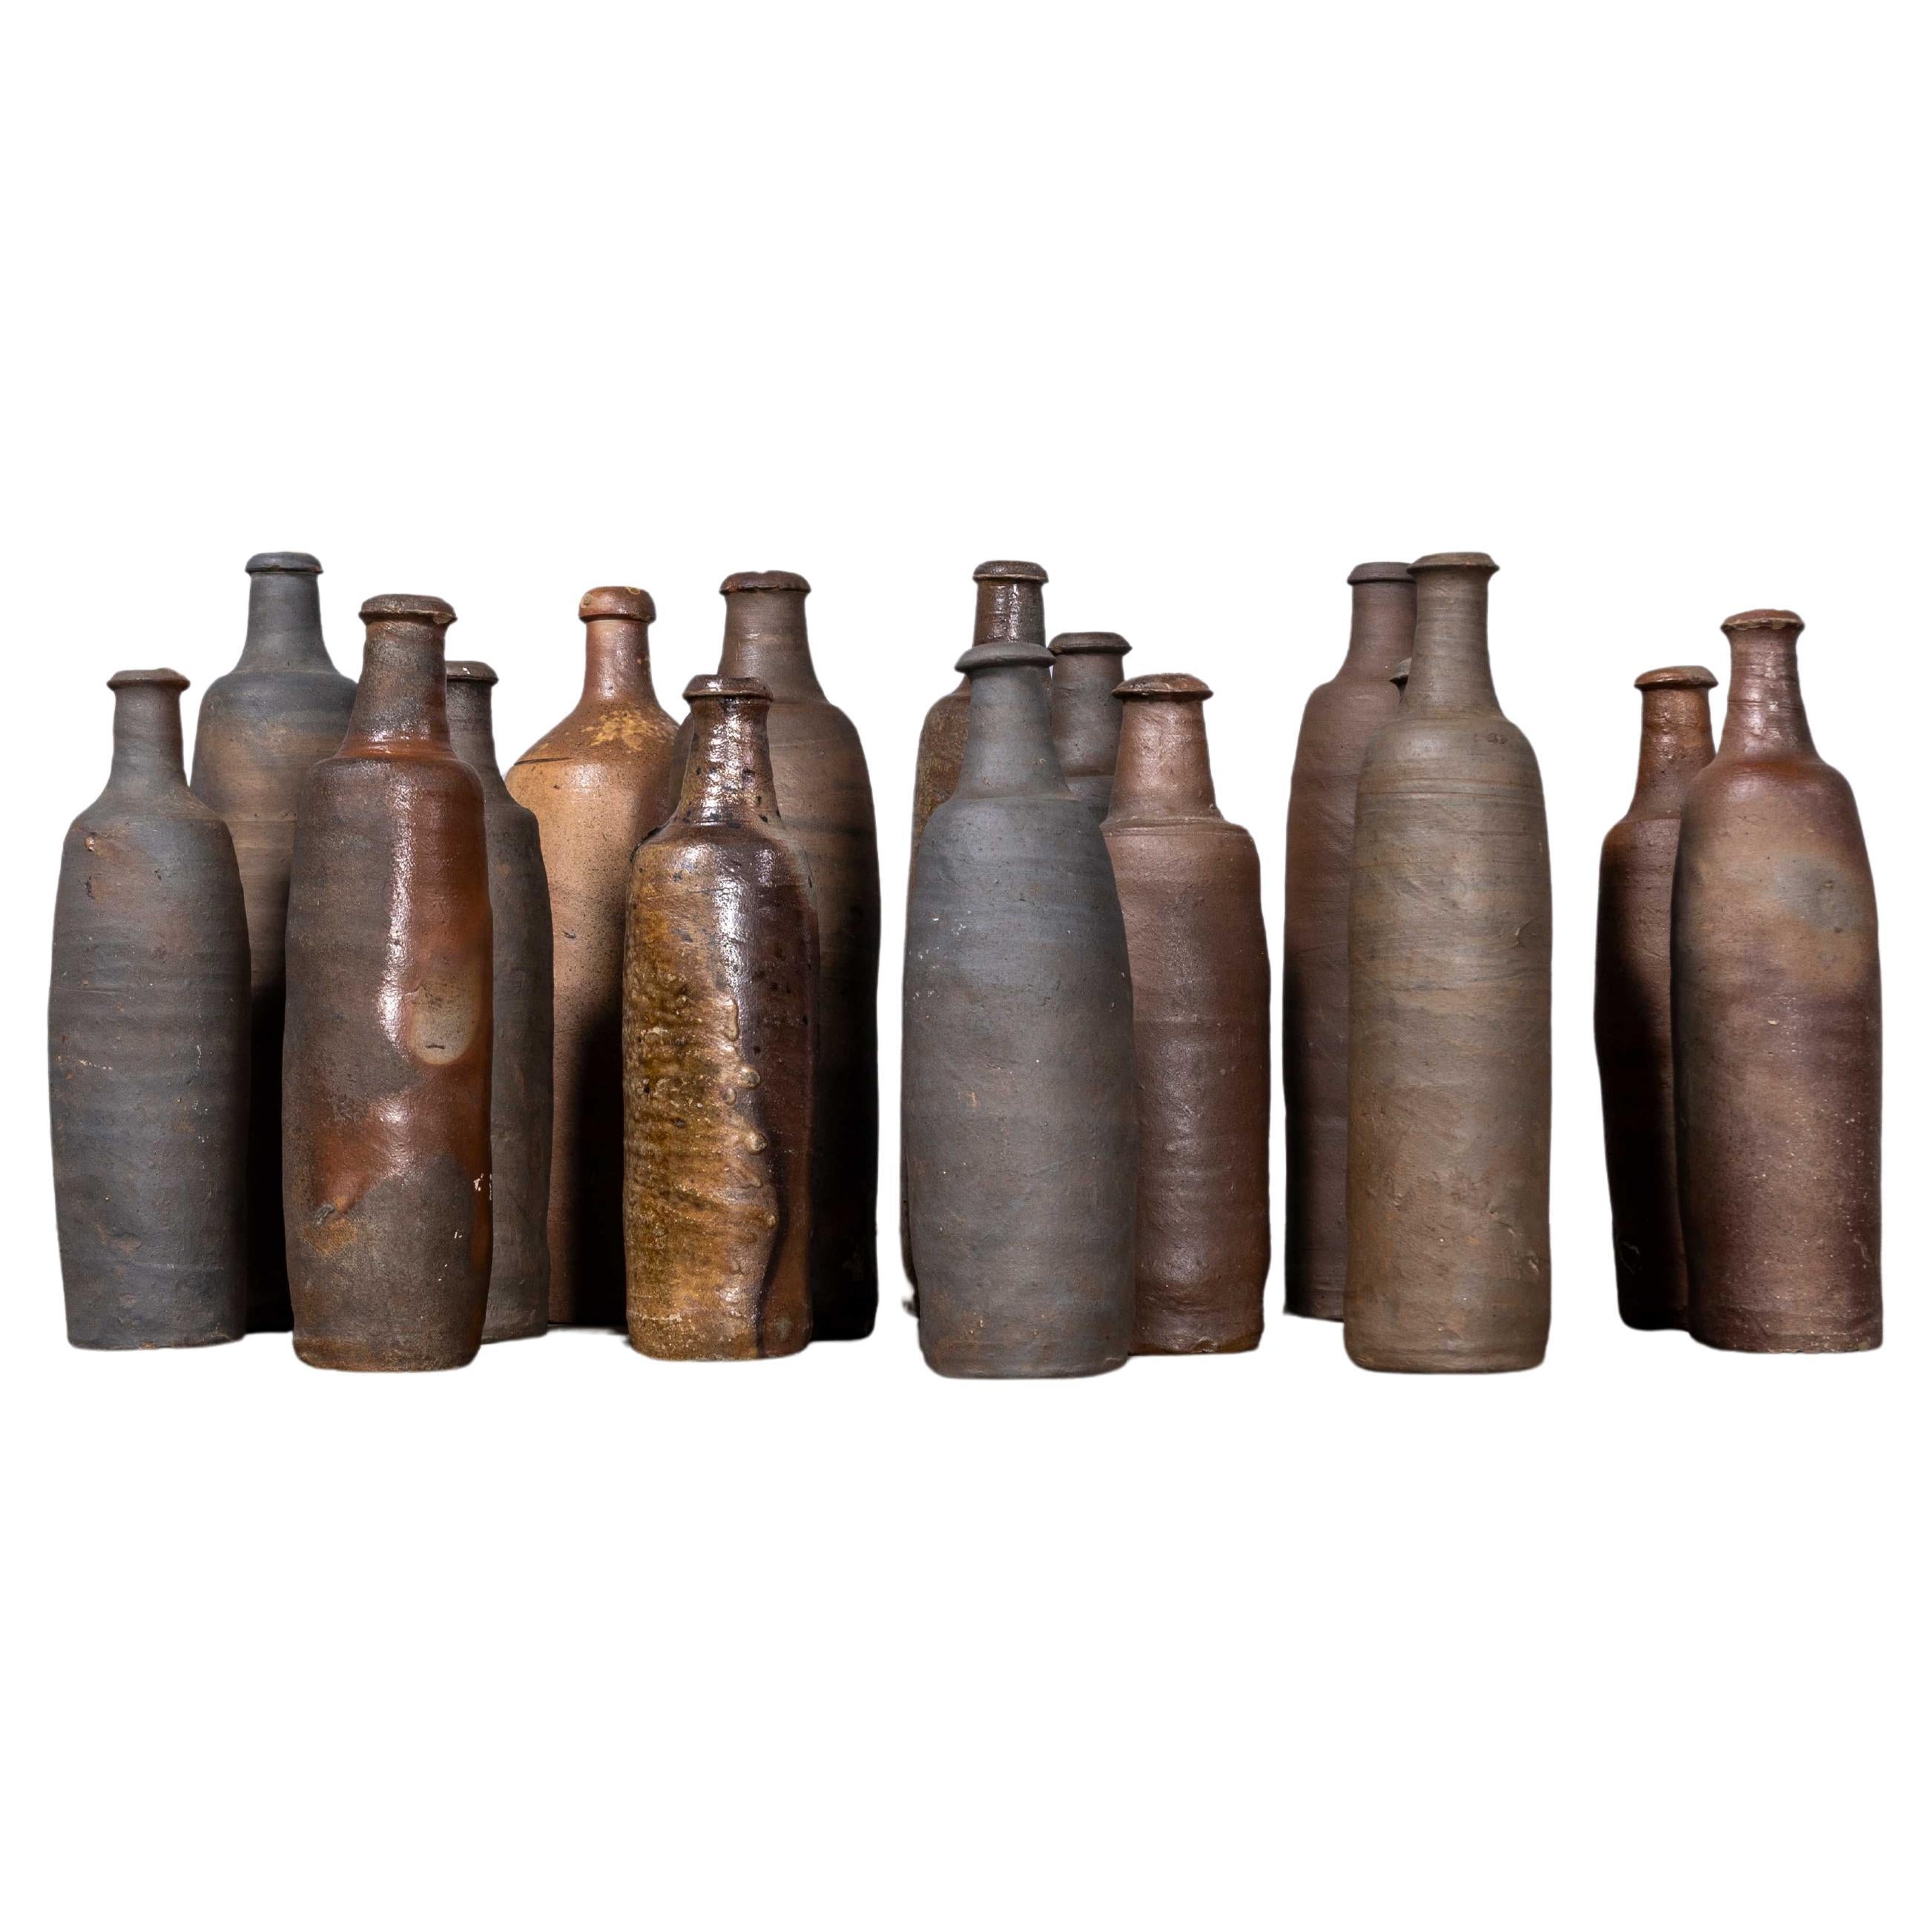 19th Century French Stoneware Bottles